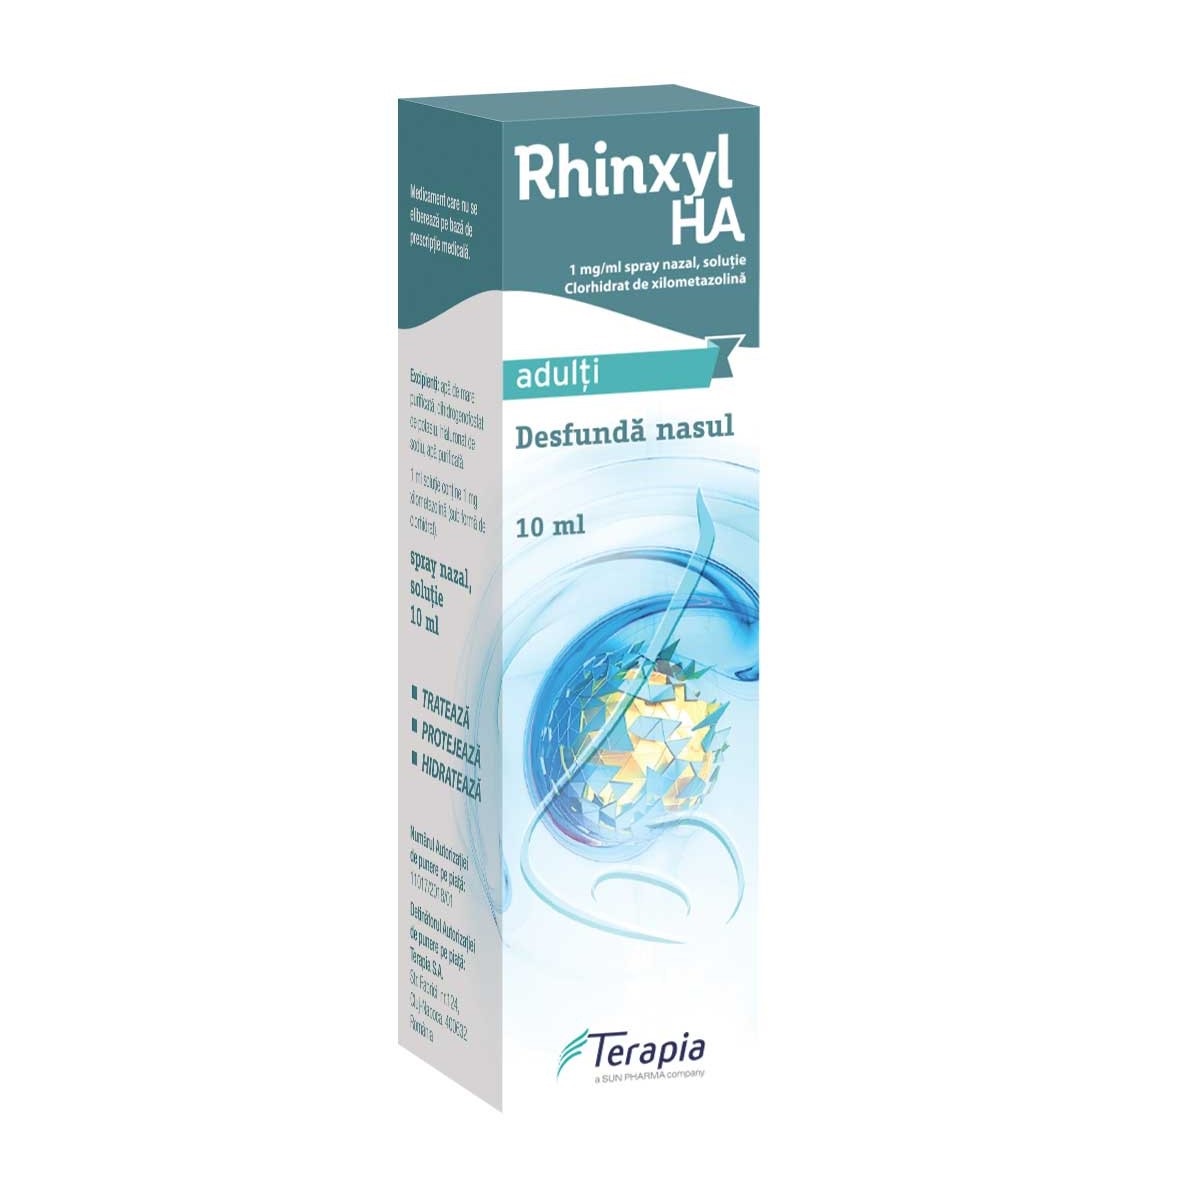 Rhinxyl HA 1mg/ml spray nazal 10ml